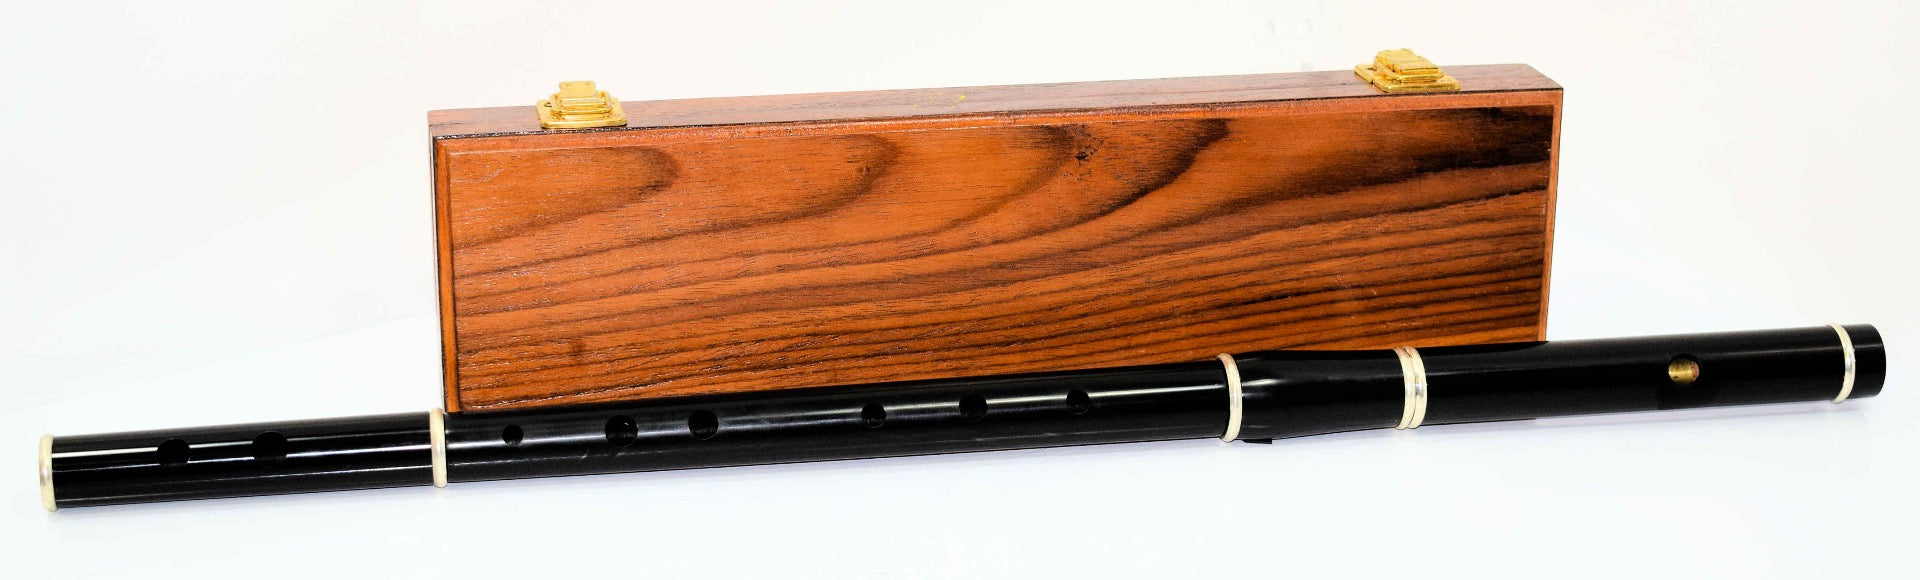 Irish D Flute in Wooden Case